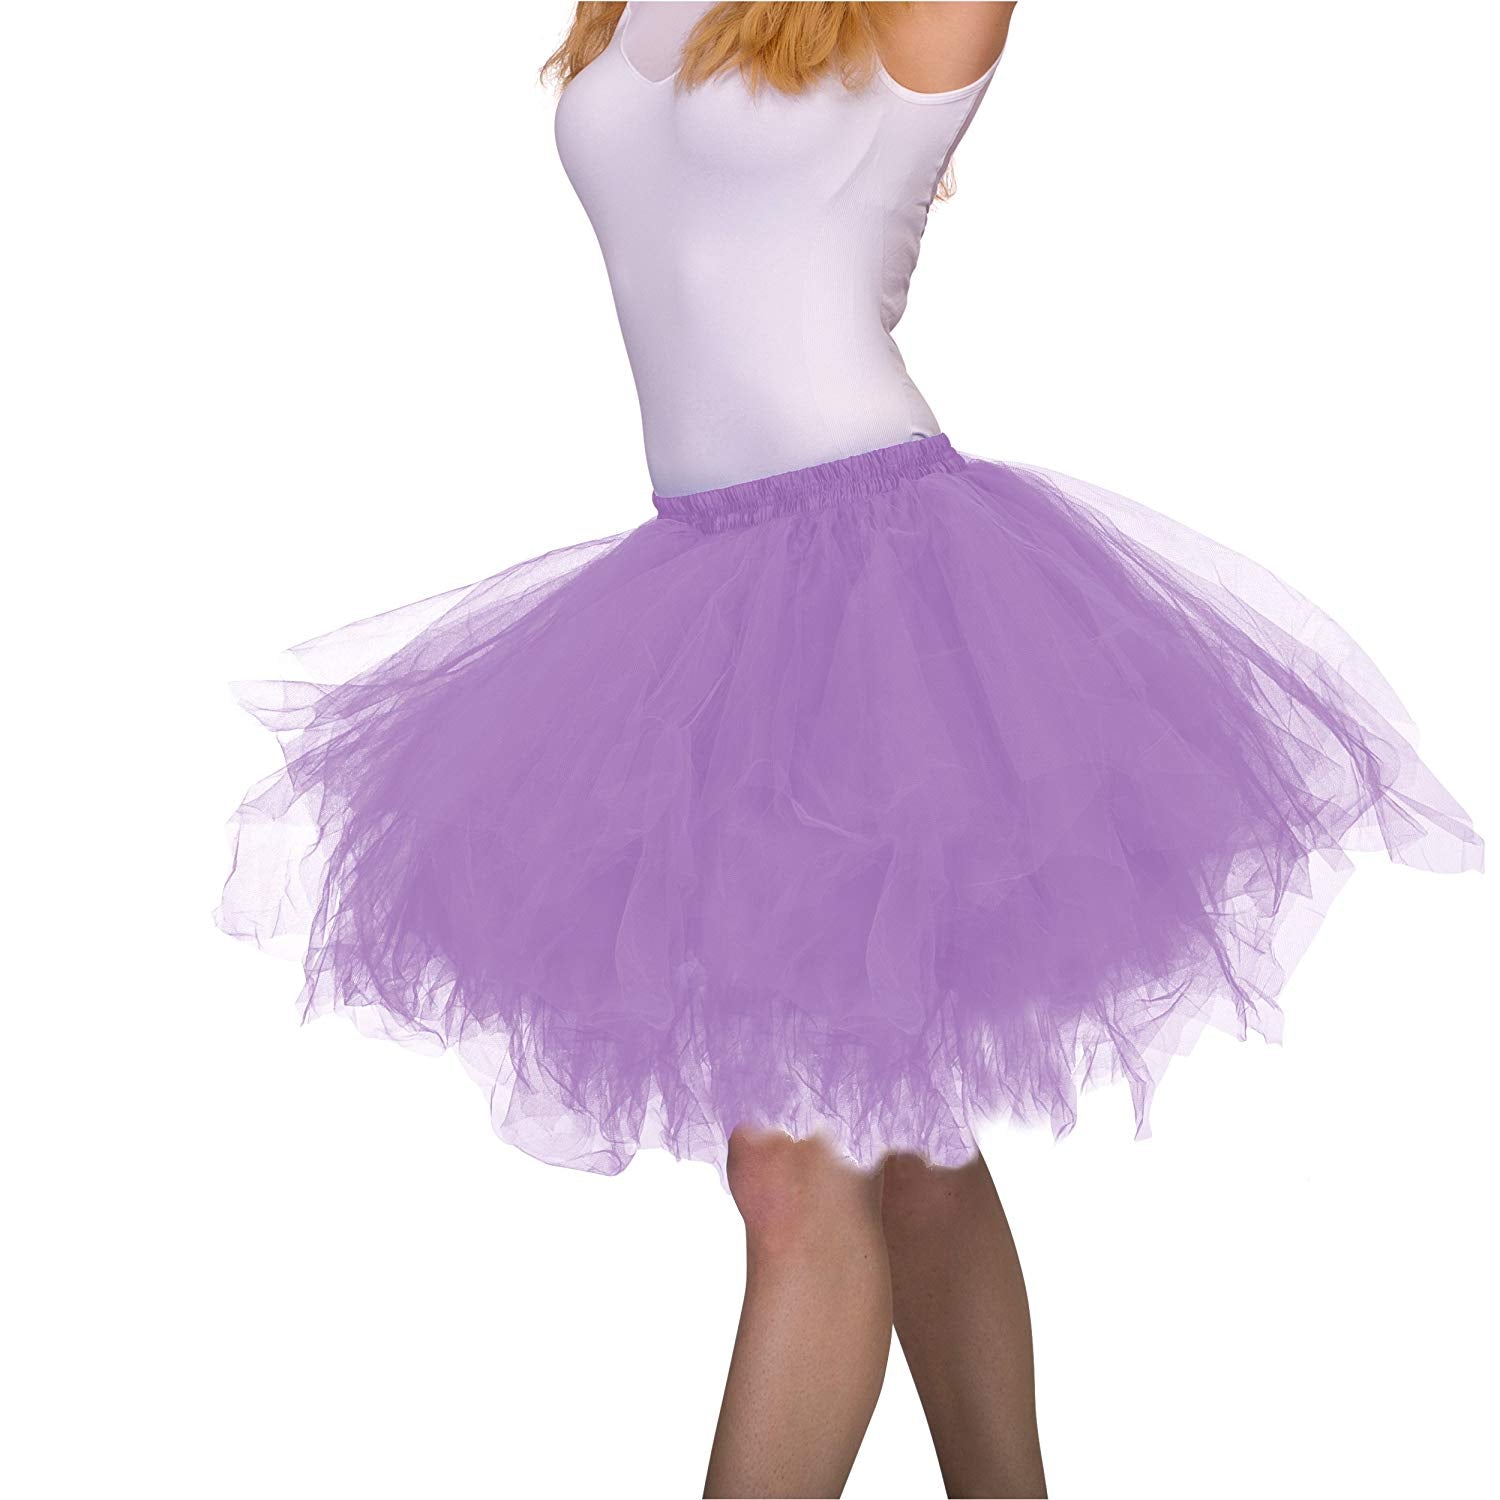 Tutu Skirt for Adults Lavender